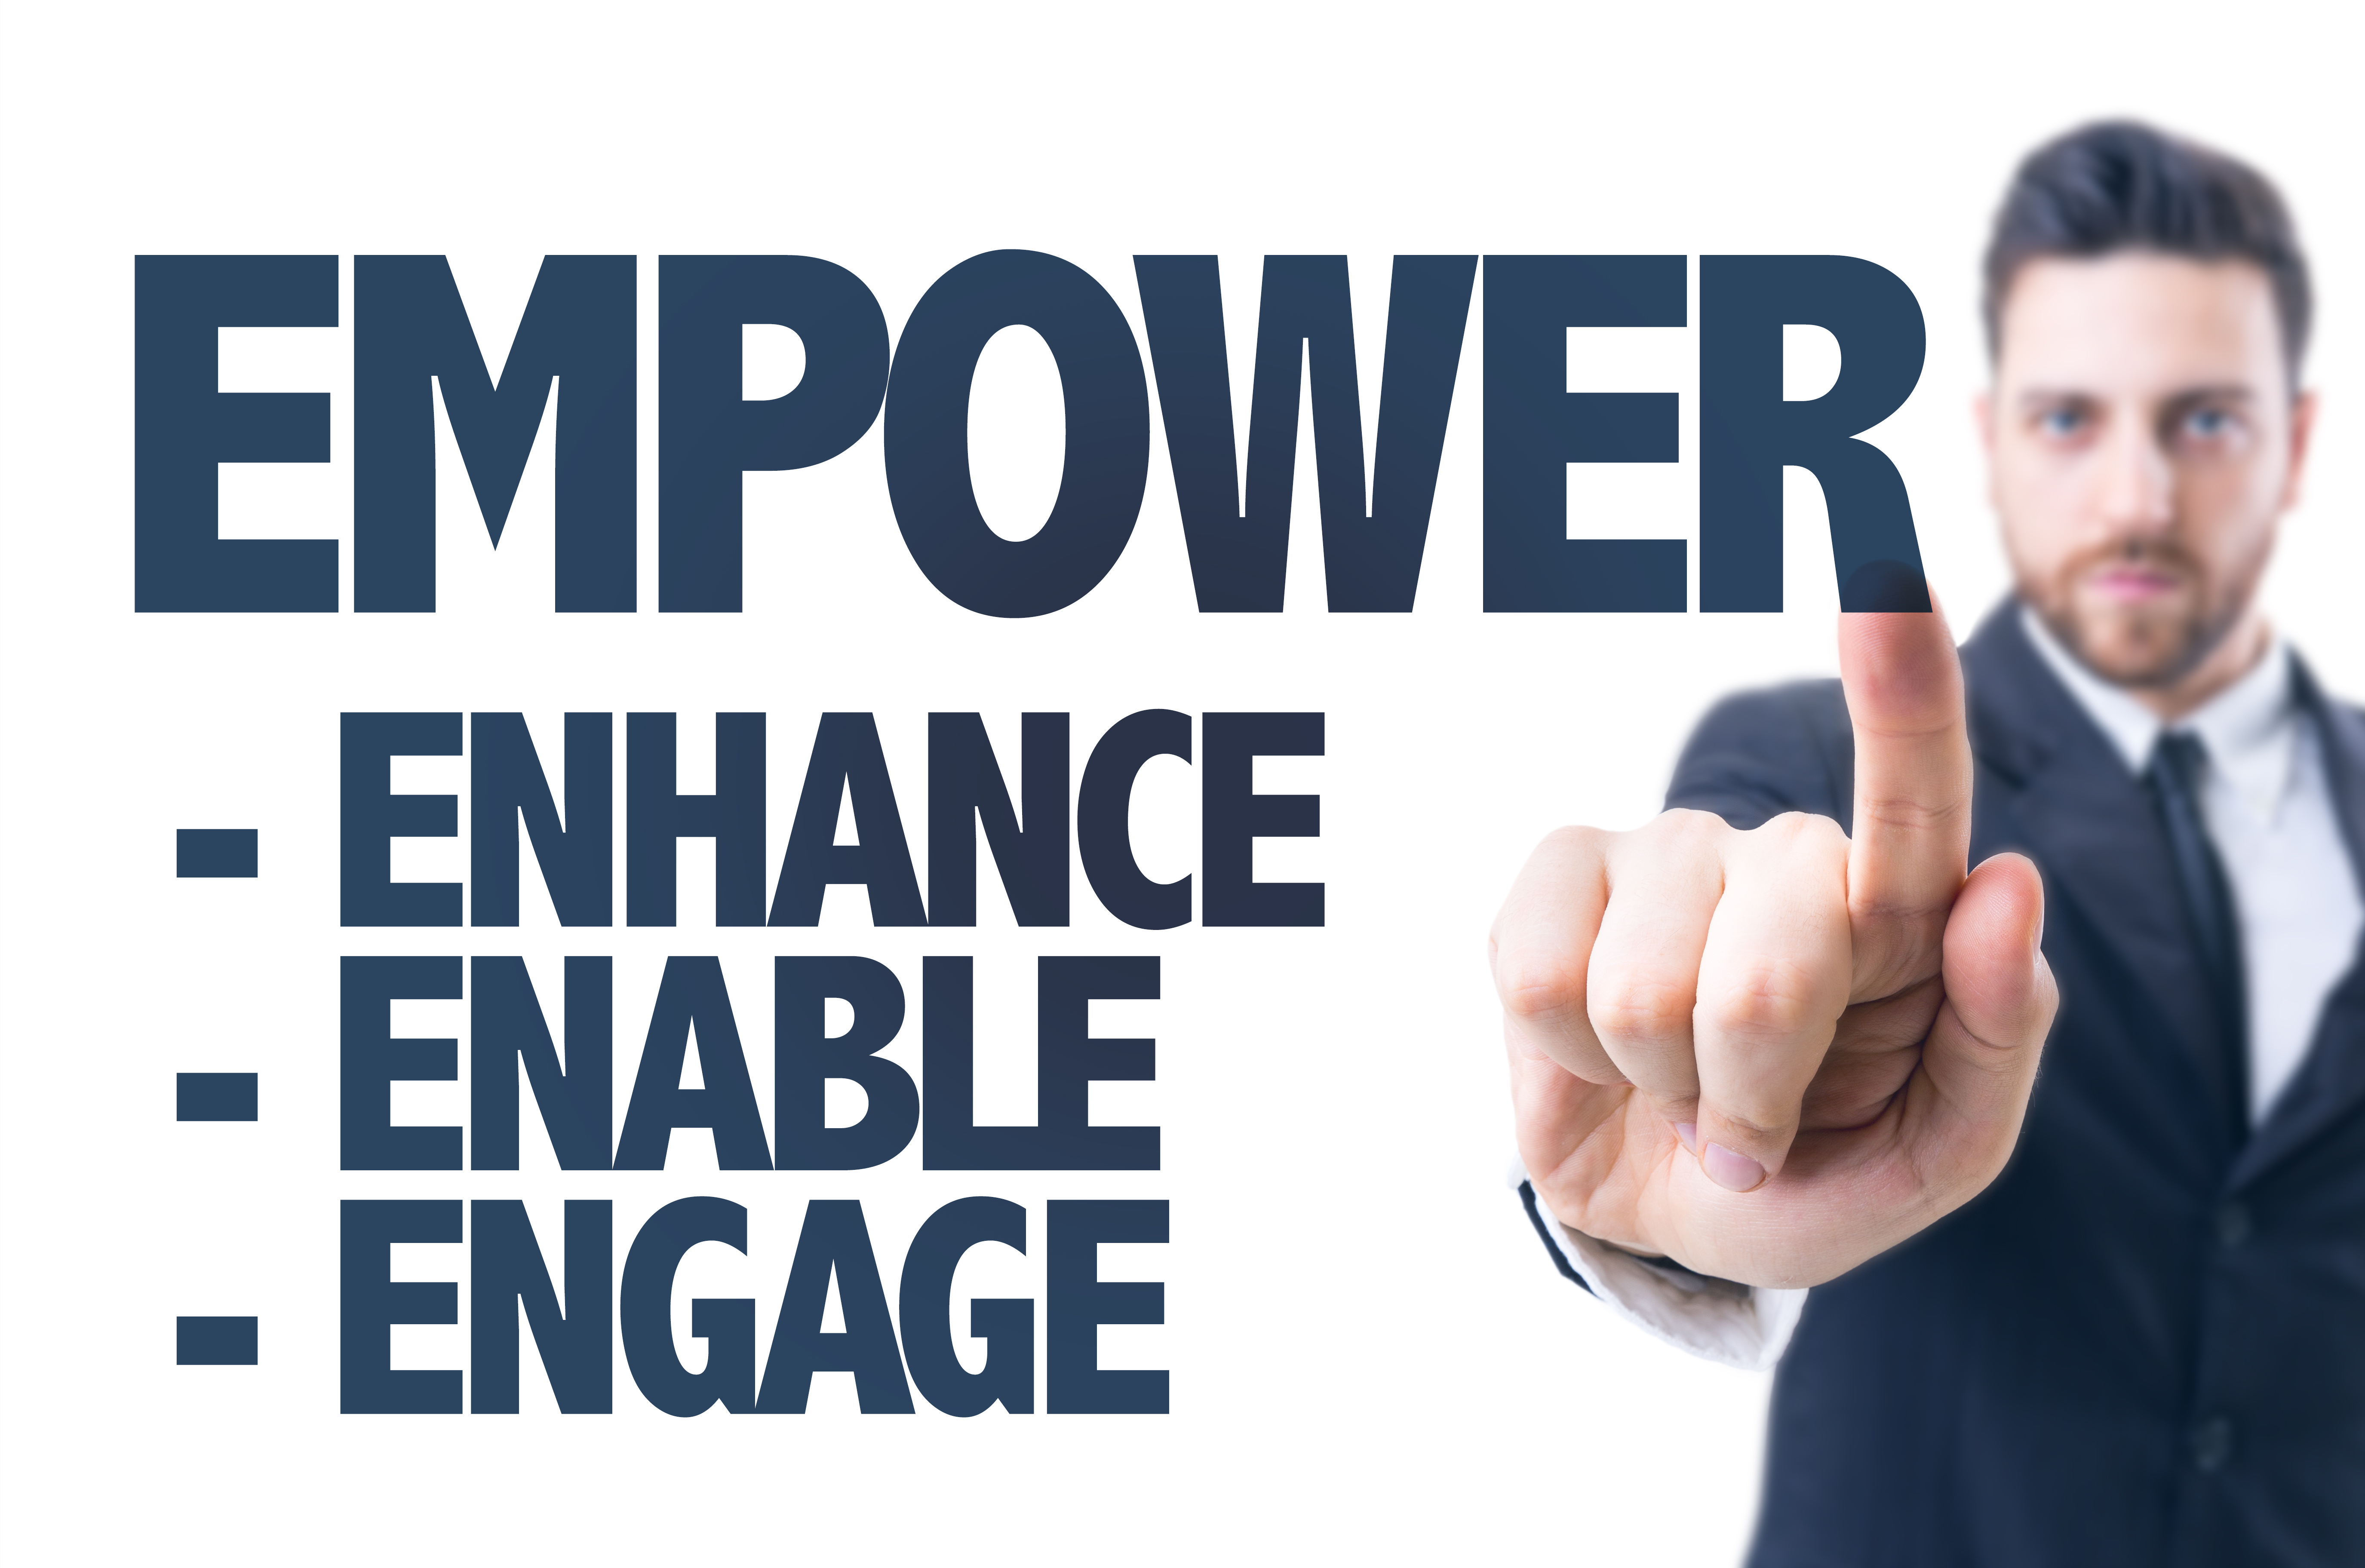 Empower Enhance Enable Engage